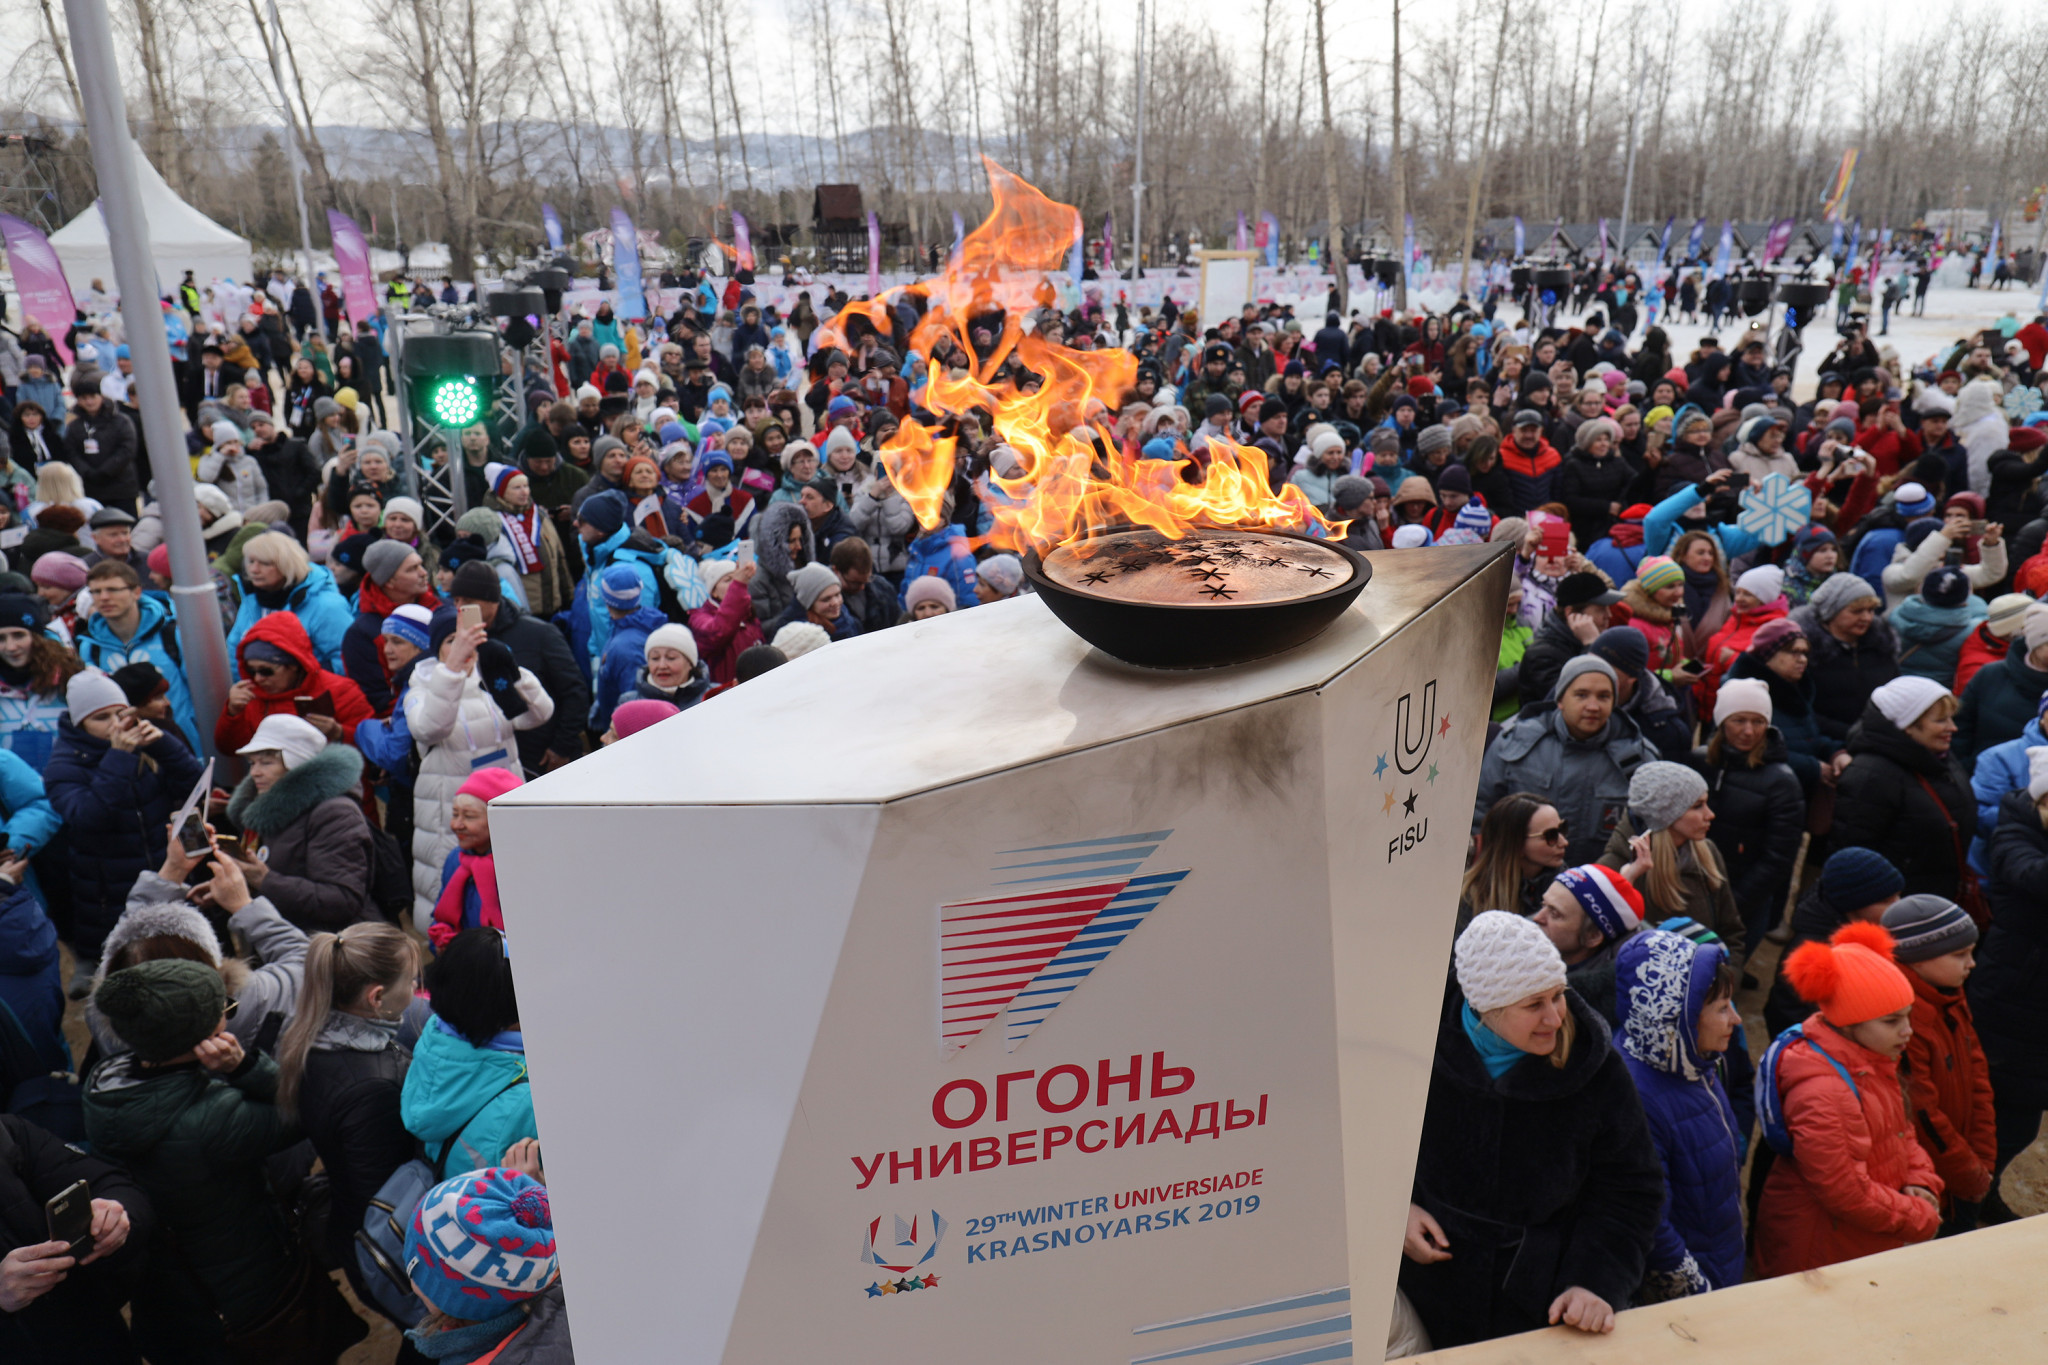 Krasnoyarsk 2019: Build-up to Opening Ceremony of 29th Winter Universiade